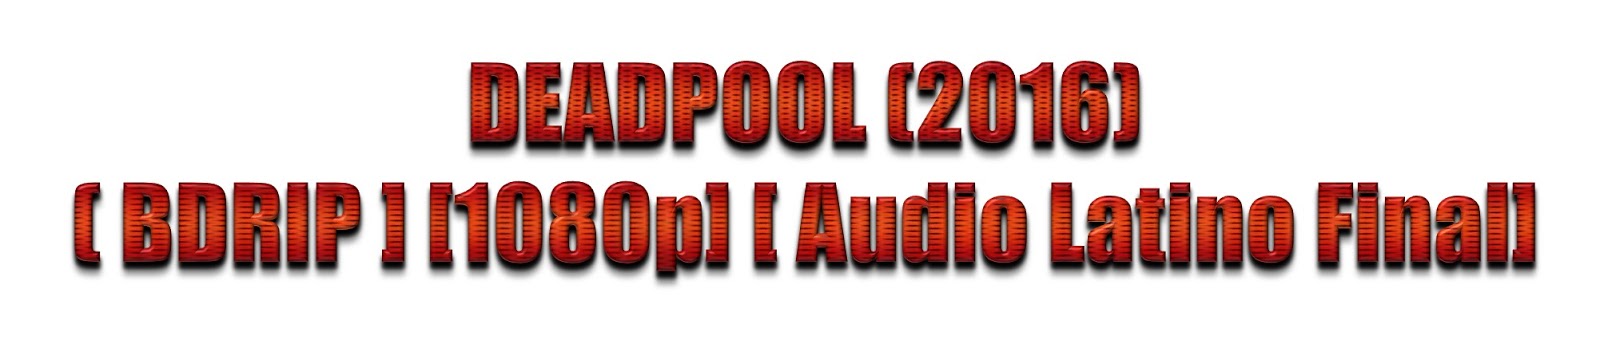 Deadpool (2016) 1080P Audio Latino Final